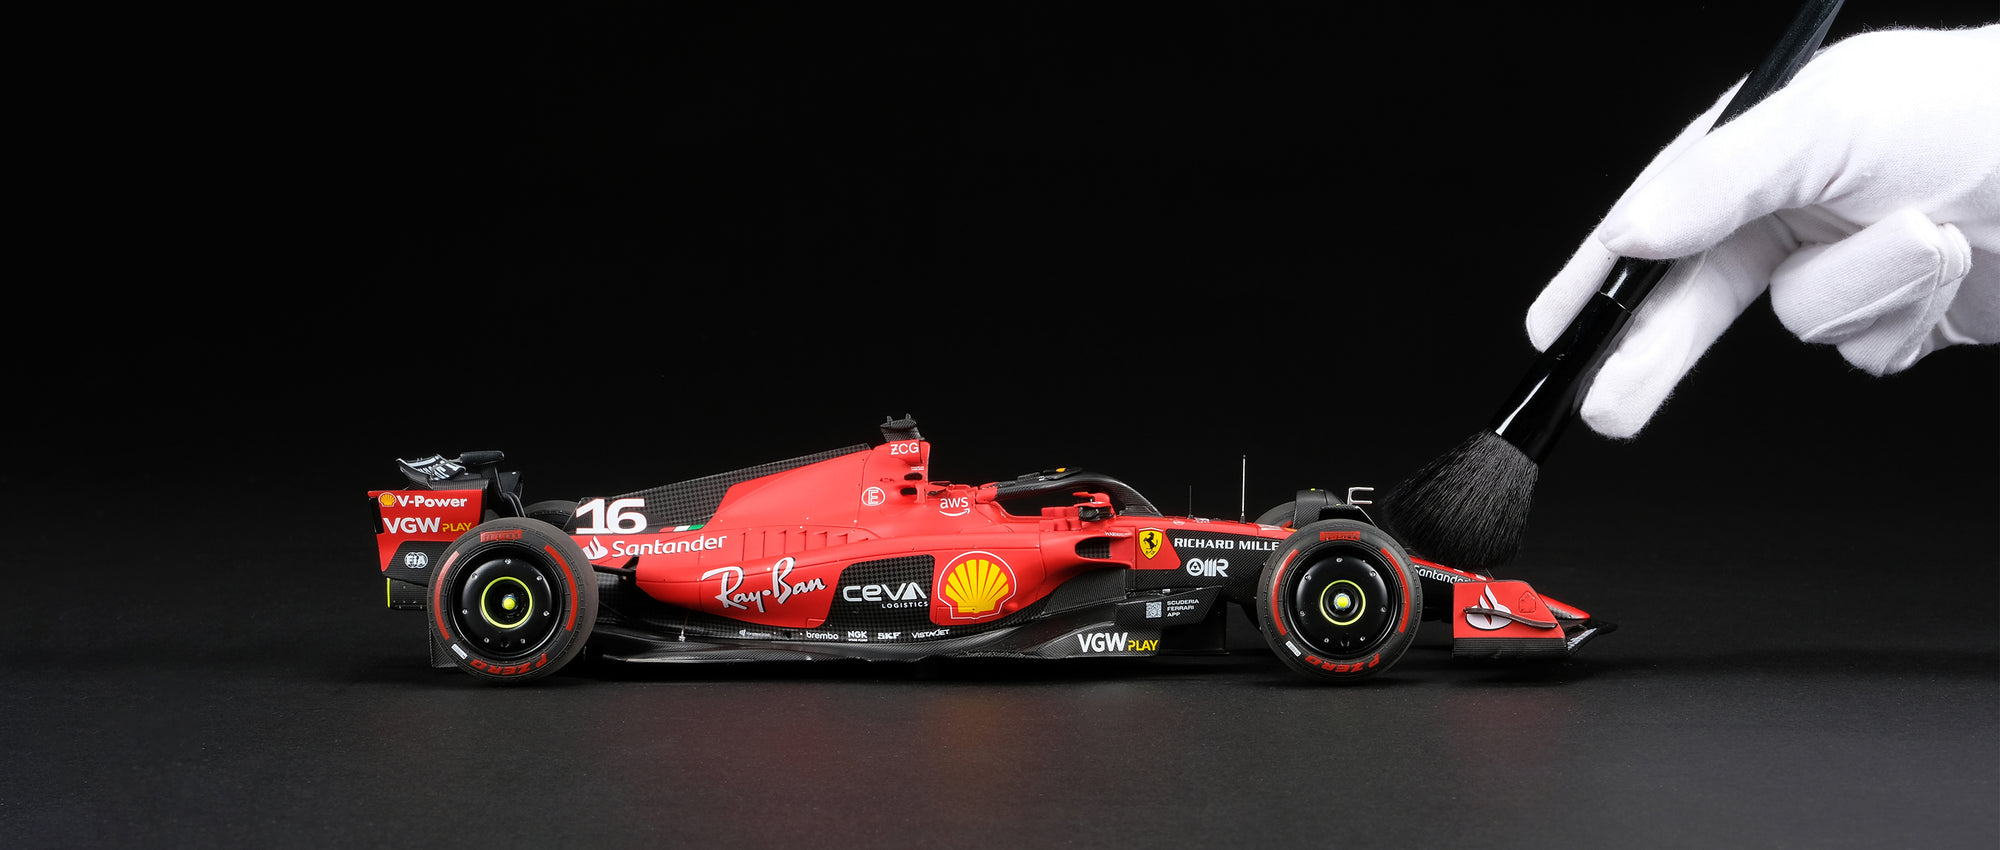 File:Formula One trophies Museo Ferrari.jpg - Wikimedia Commons